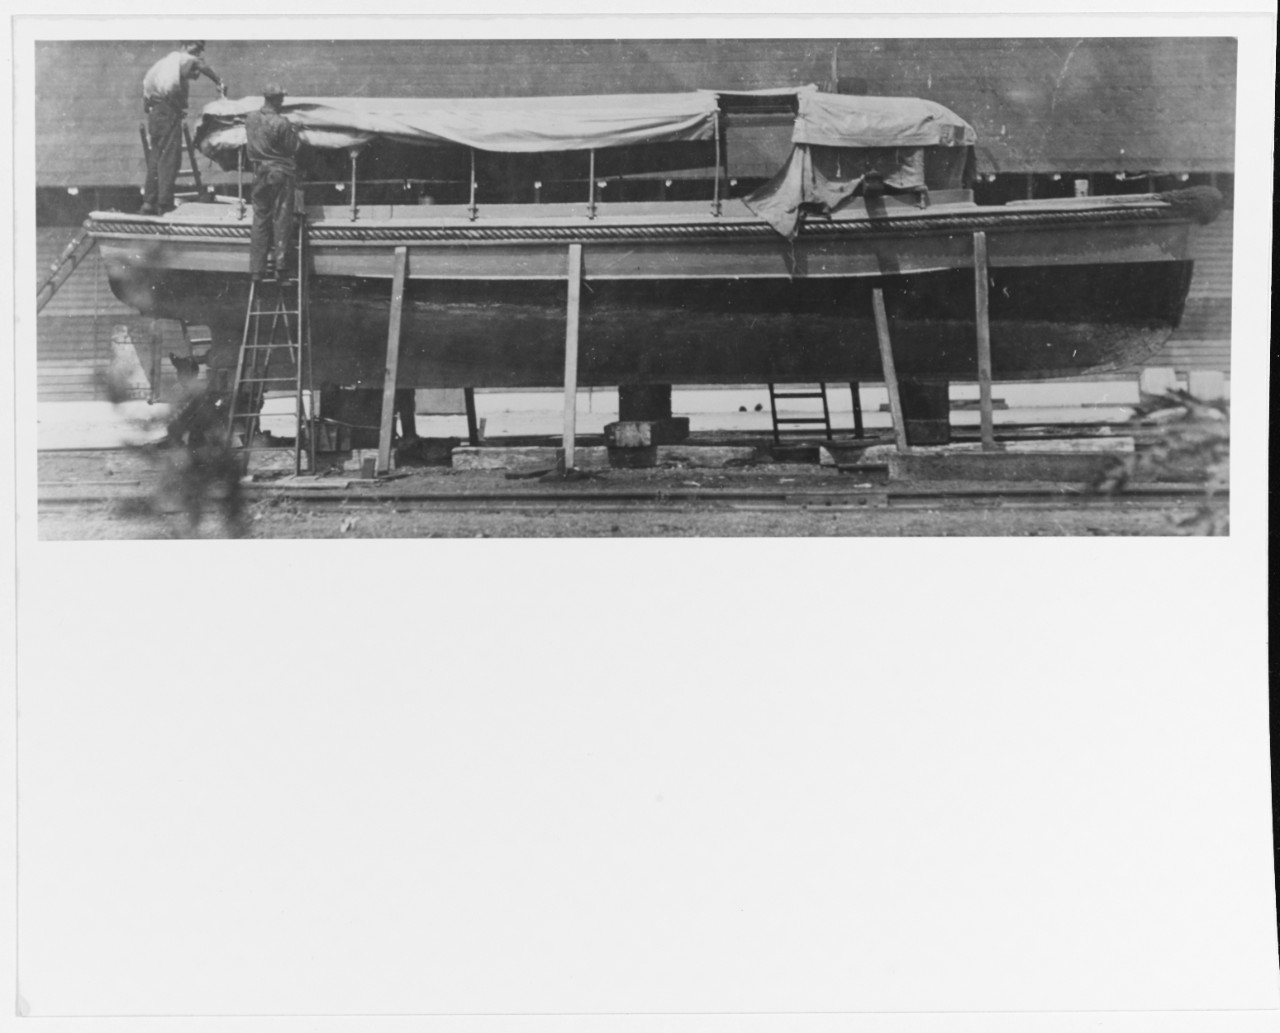 VEDETTE (U.S. Motor Boat, 1914)